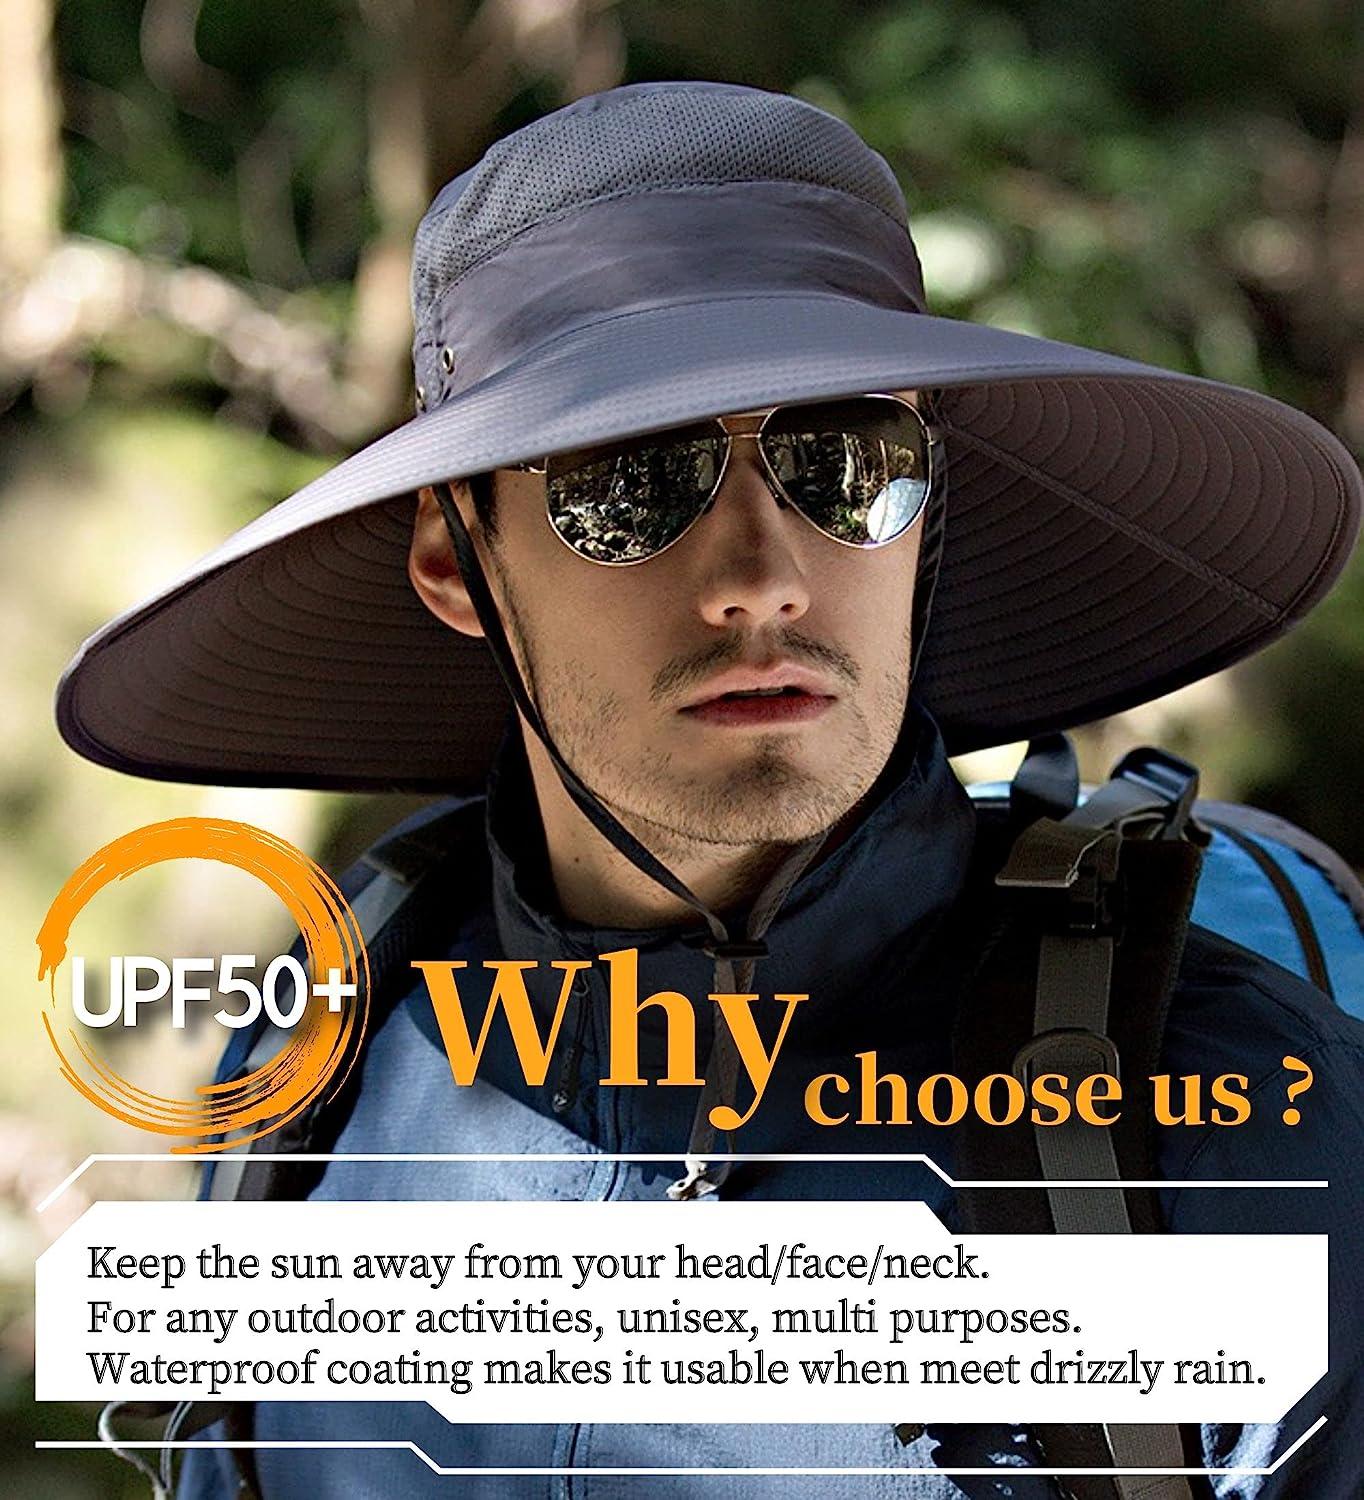 HLLMAN Super Wide Brim Sun Hat-UPF 50+ Protection,Waterproof Bucket Hat for  Fishing, Hiking, Camping,Breathable Nylon & Mesh Dark Grey